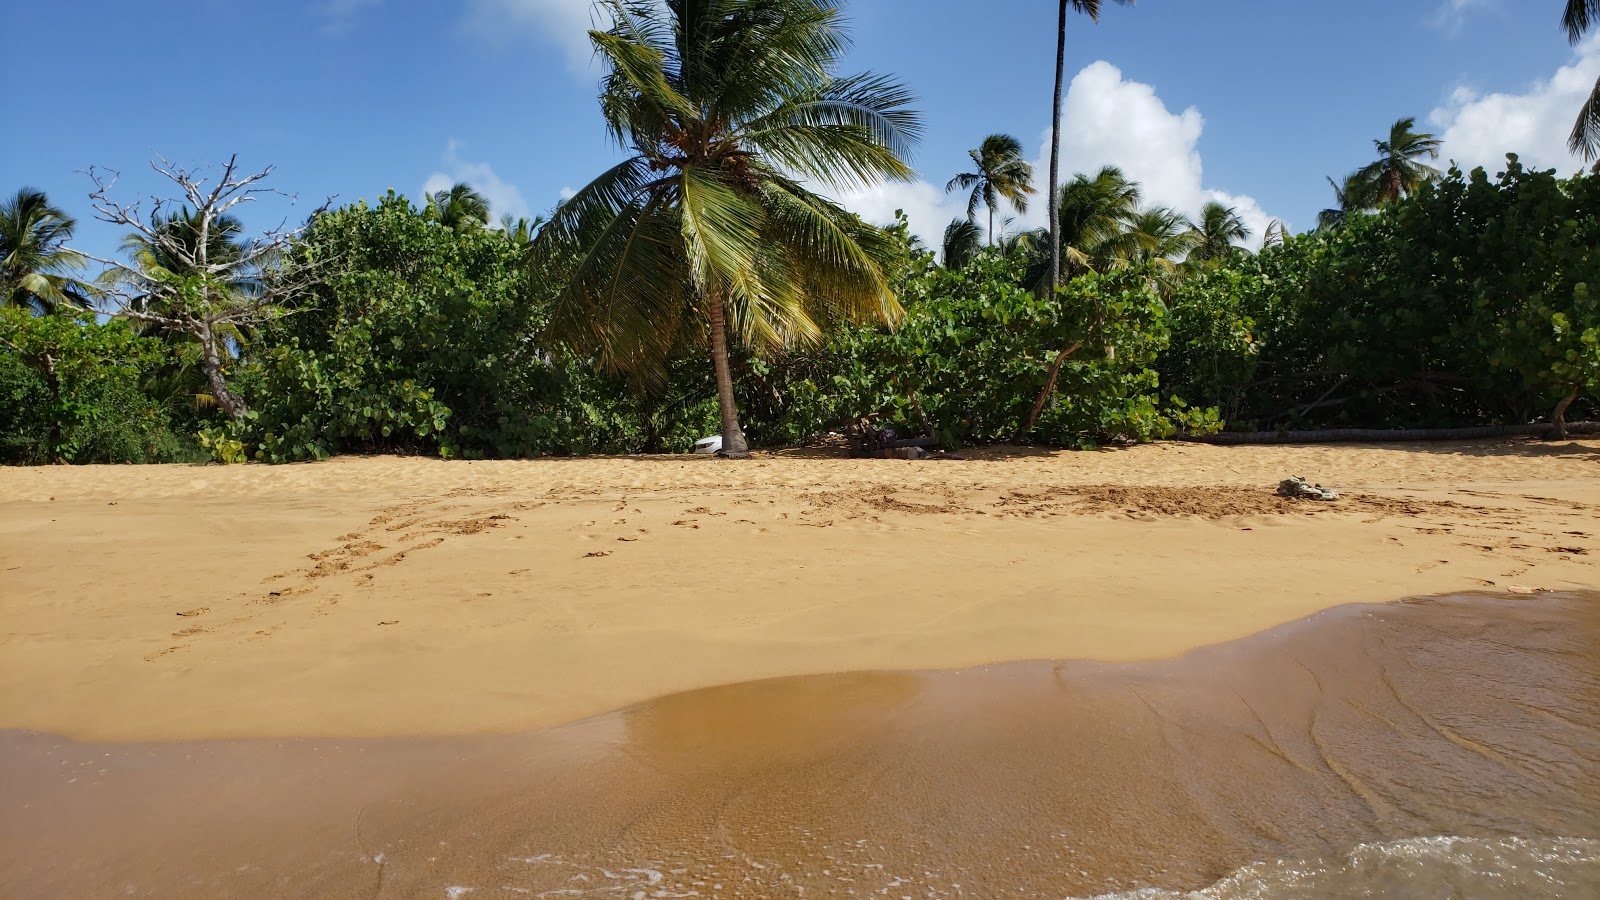 Photo of Playa Vacia Talega located in natural area